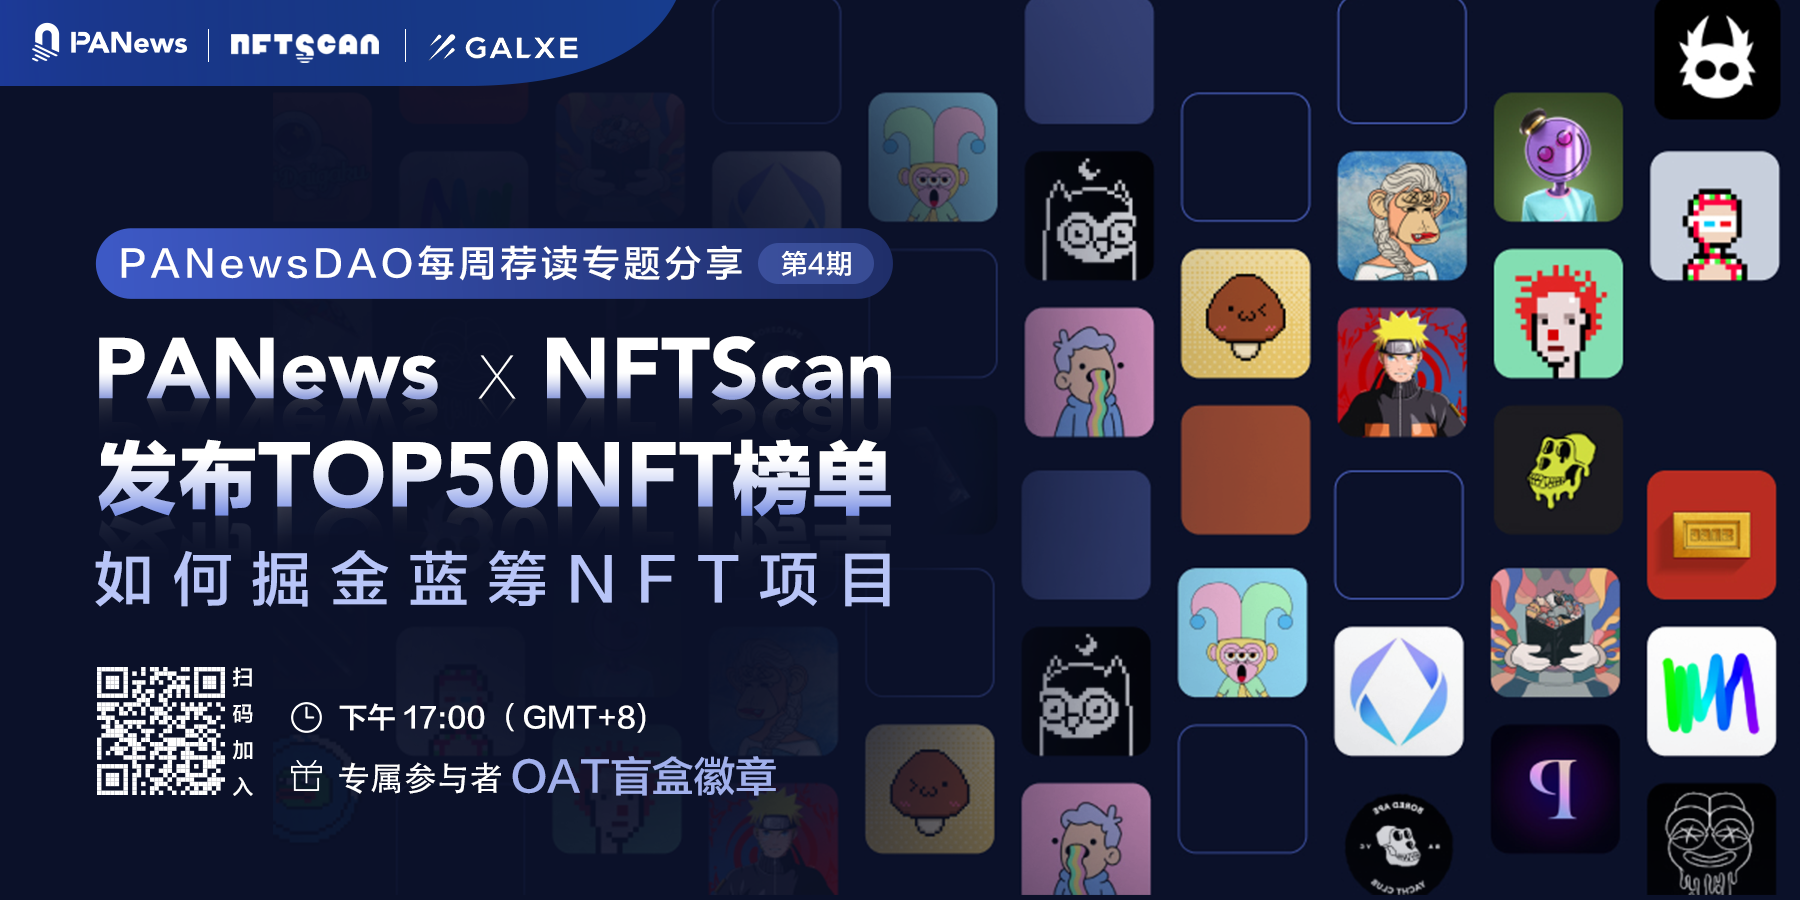 PANews与NFTScan联合推出Top50 NFT Collection全球影响力榜单